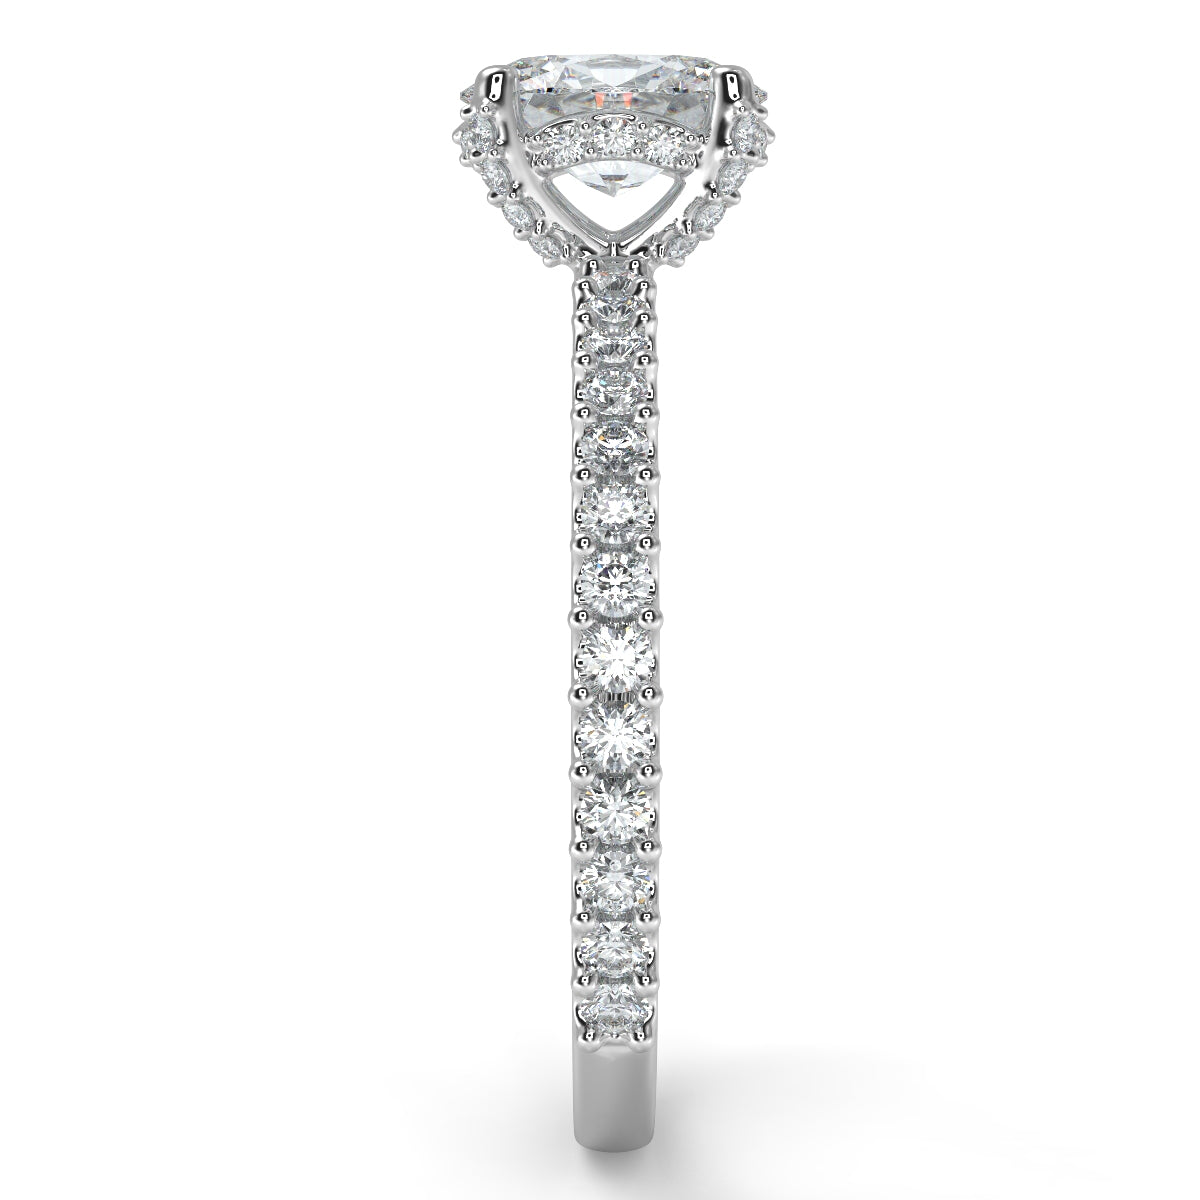 Diana paved oval-cut diamonds 